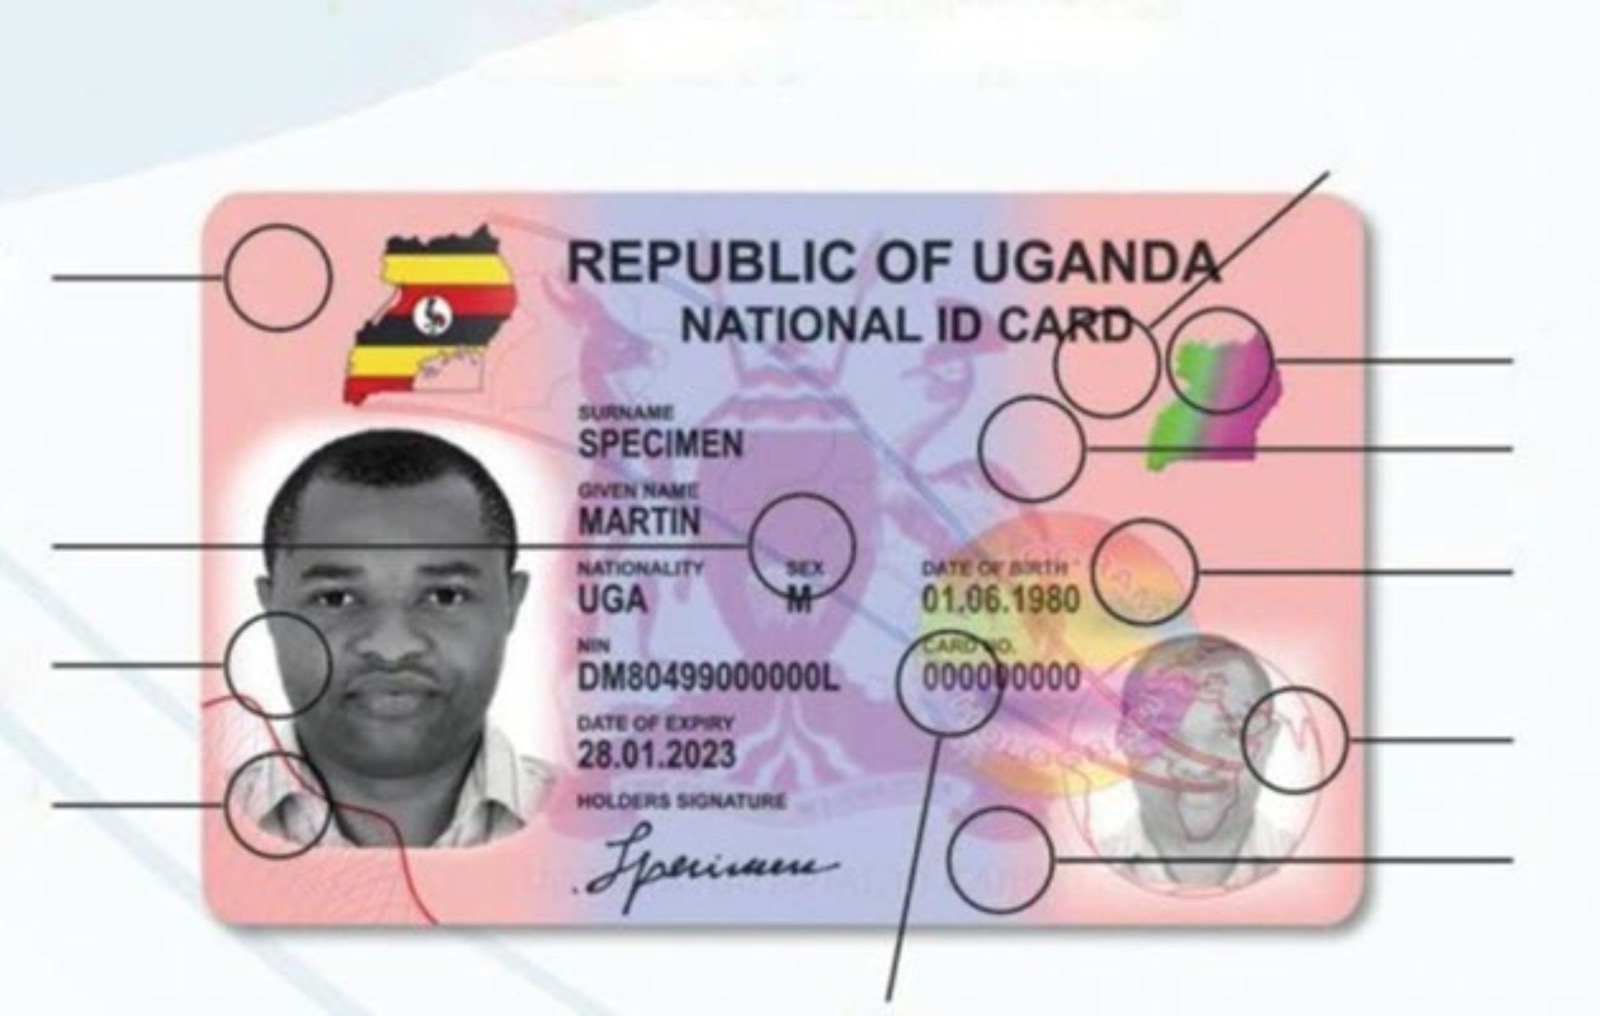 uganda national id card features